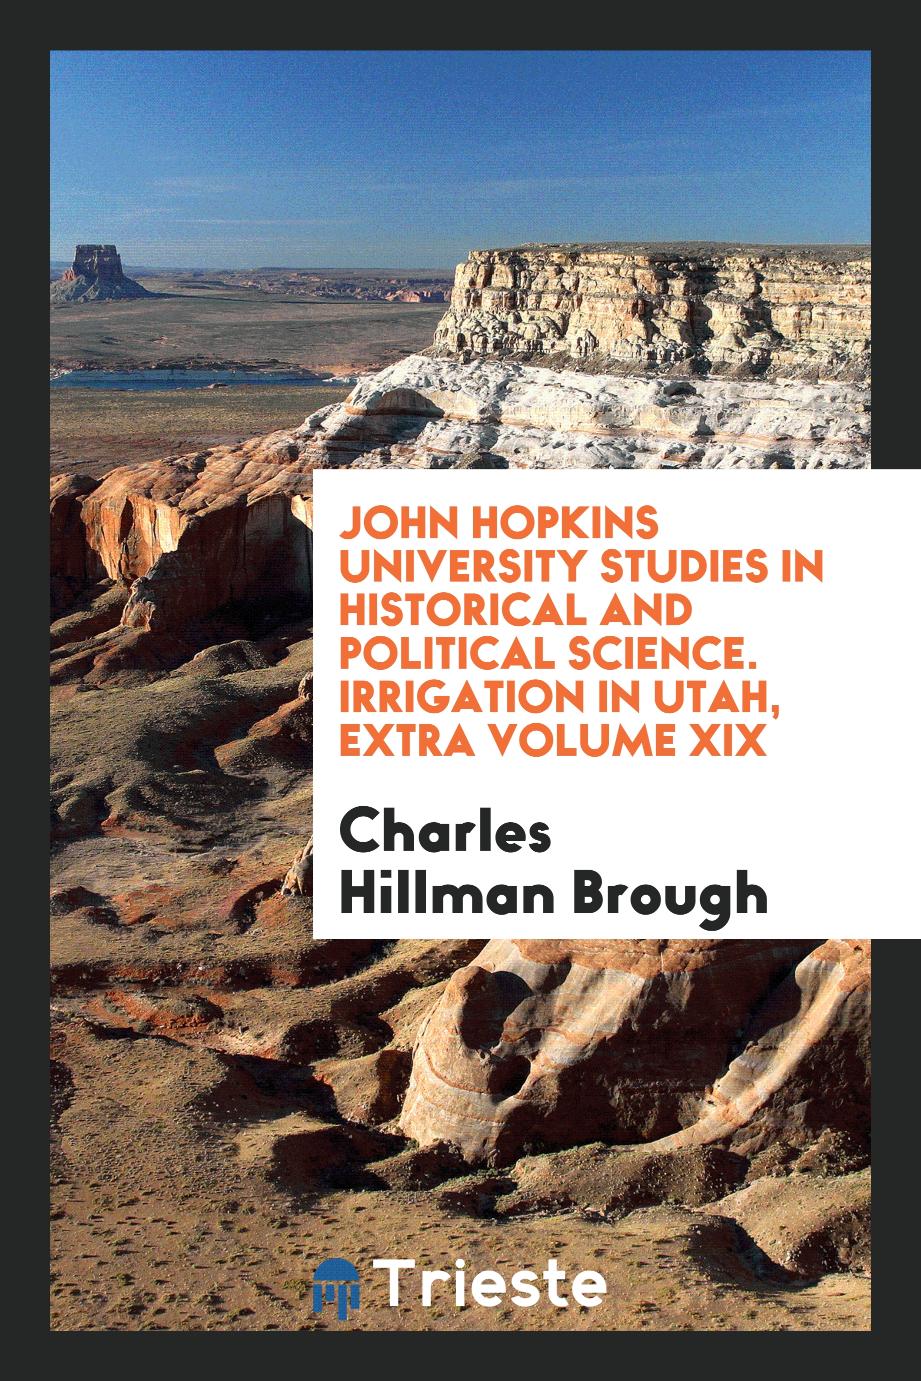 John Hopkins University Studies in Historical and Political Science. Irrigation in Utah, Extra Volume XIX